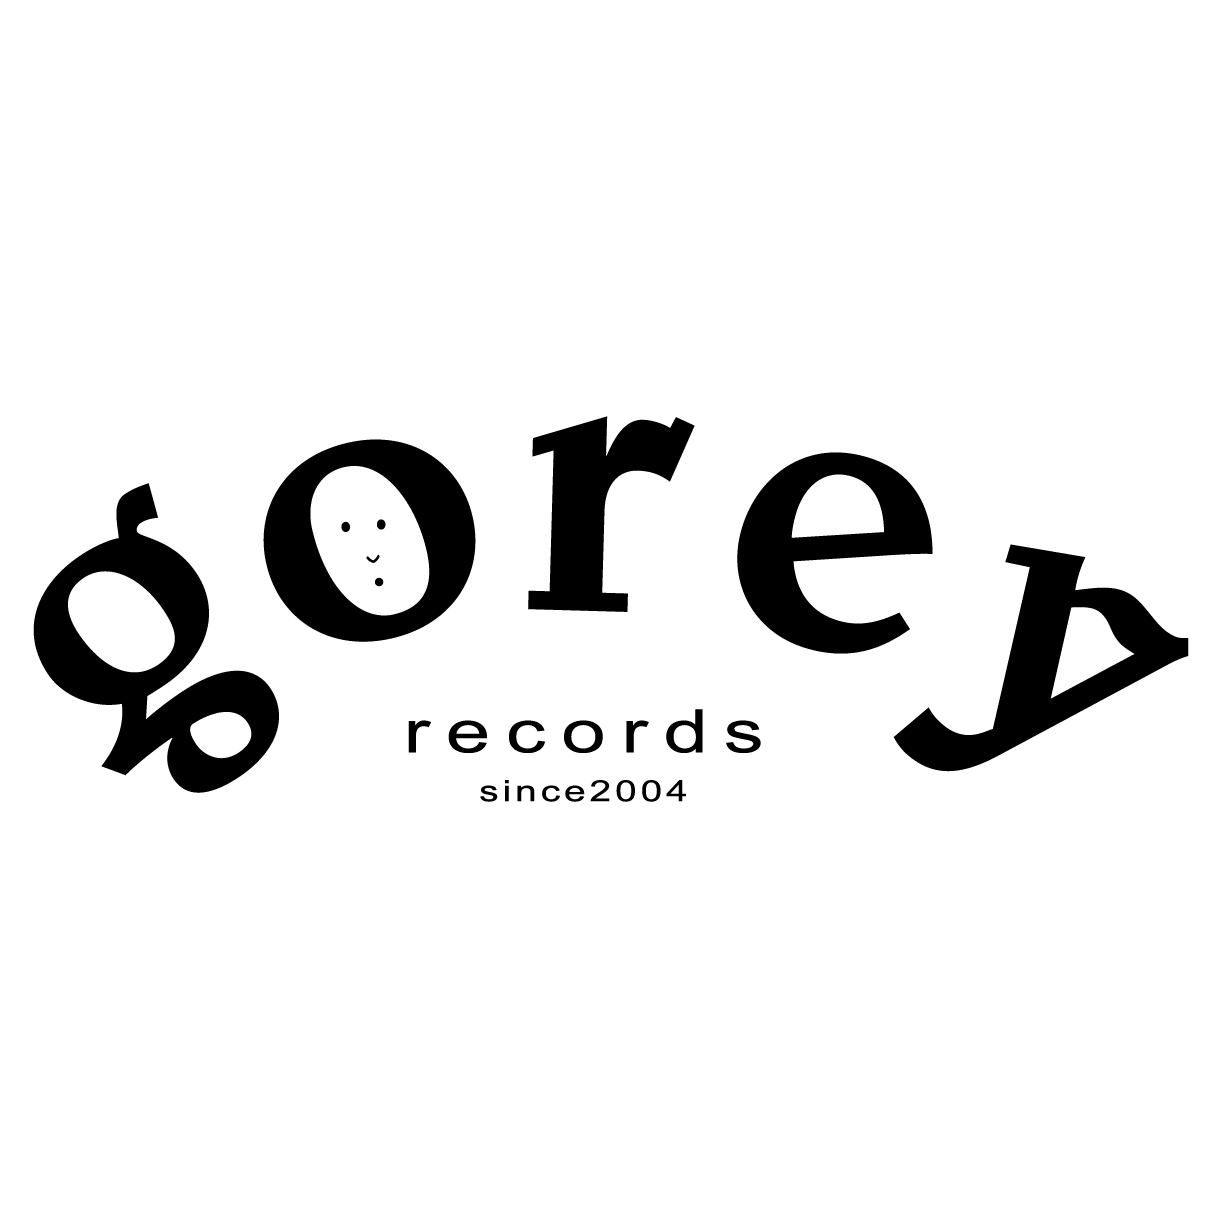 Website: goret records